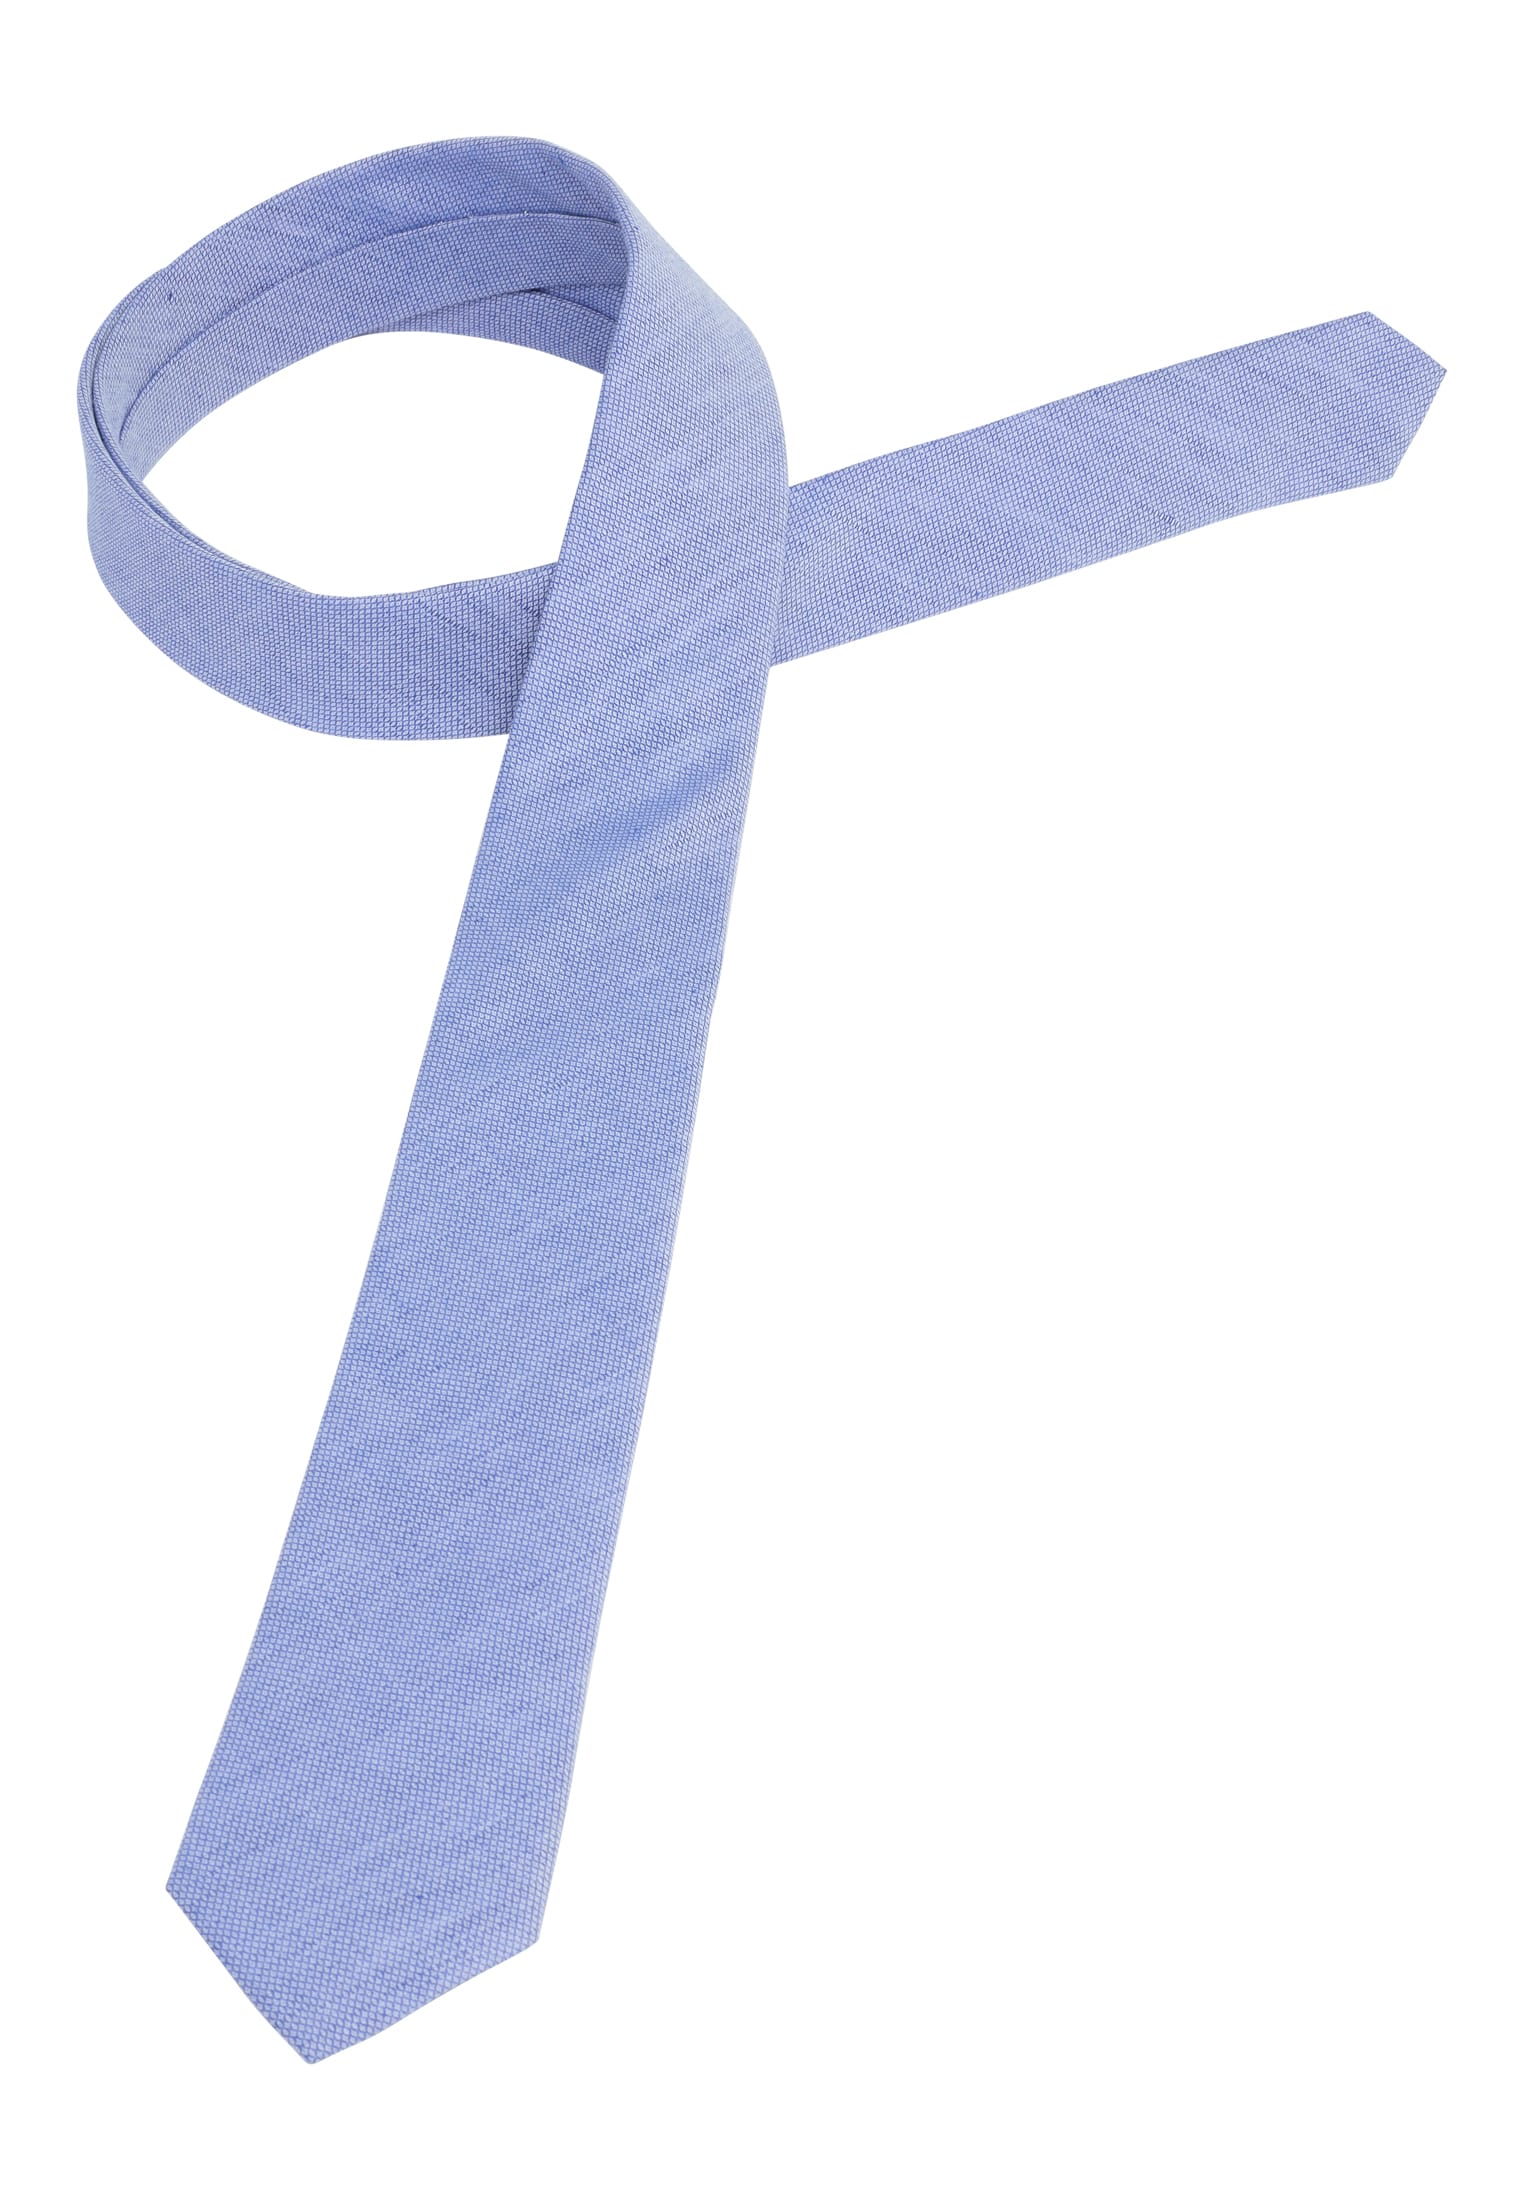 Krawatte in royal | blau strukturiert 142 blau | 1AC01947-01-51-142 royal 